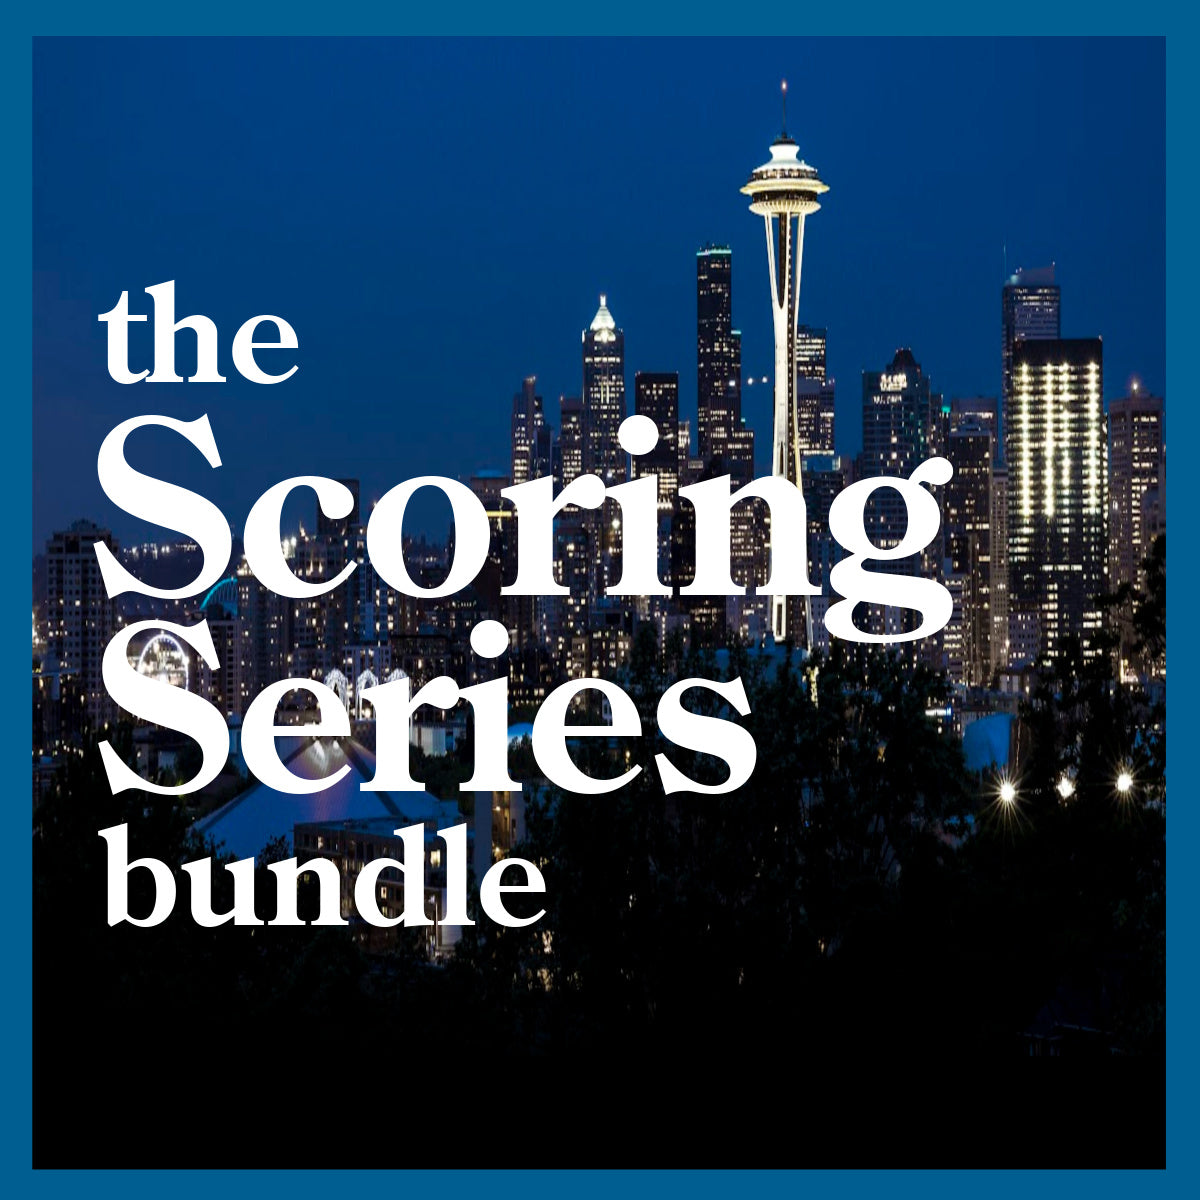 The Scoring Series, Books 4-6